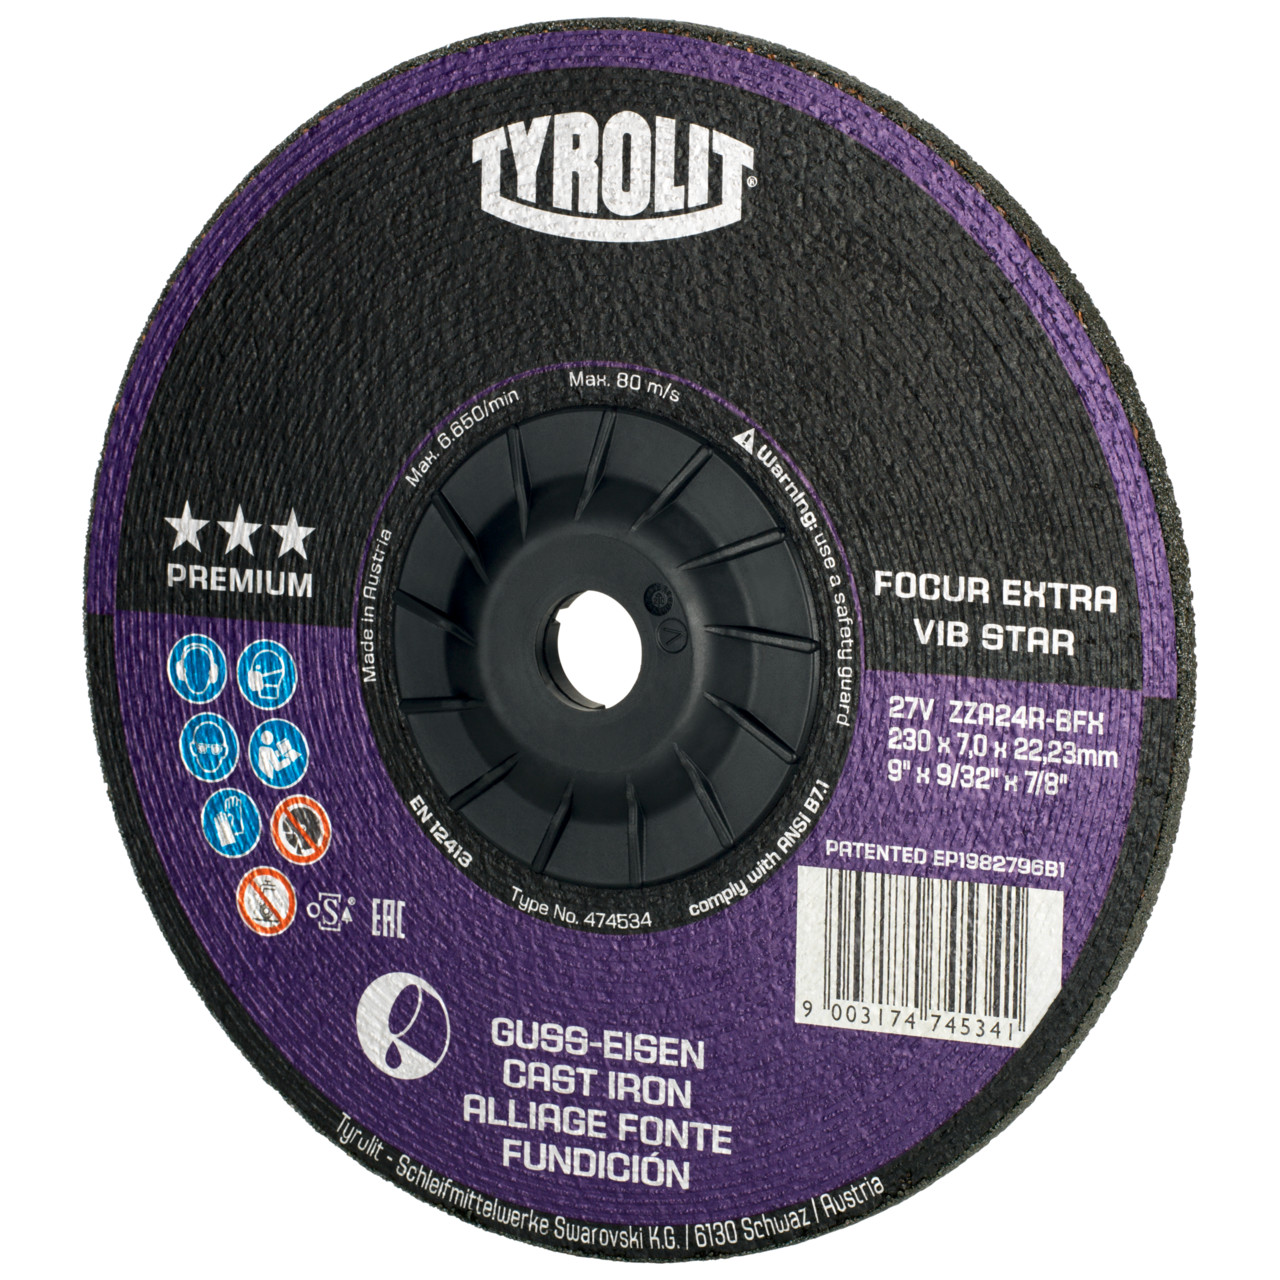 TYROLIT grinding wheel DxUxH 178x7x22.23 FOCUR Extra Vibstar for cast iron, shape: 27 - offset version, Art. 474531